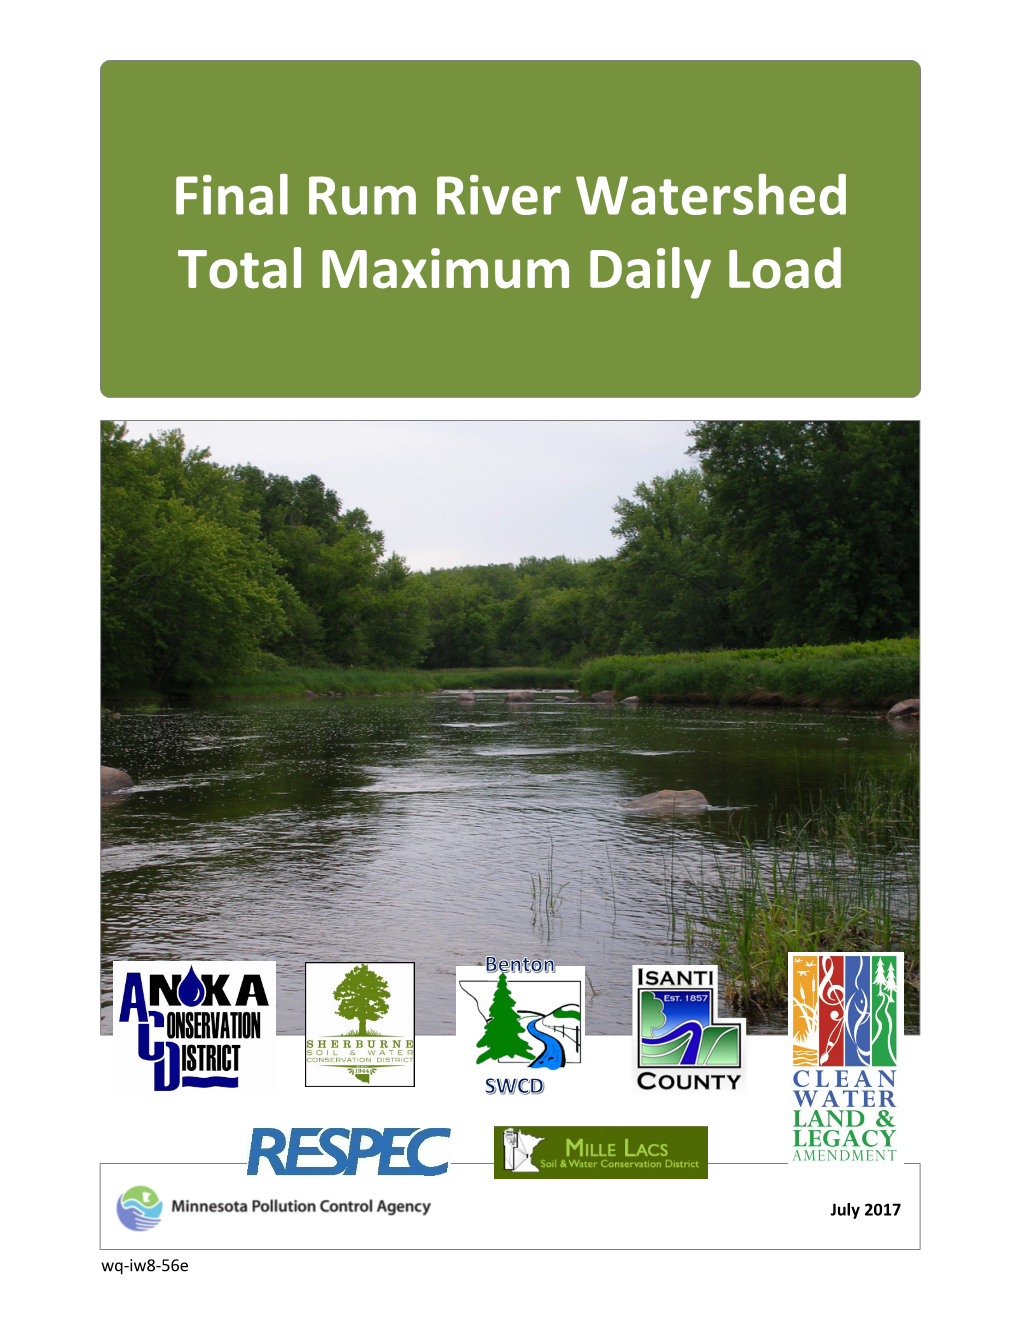 Final Rum River Watershed Total Maximum Daily Load